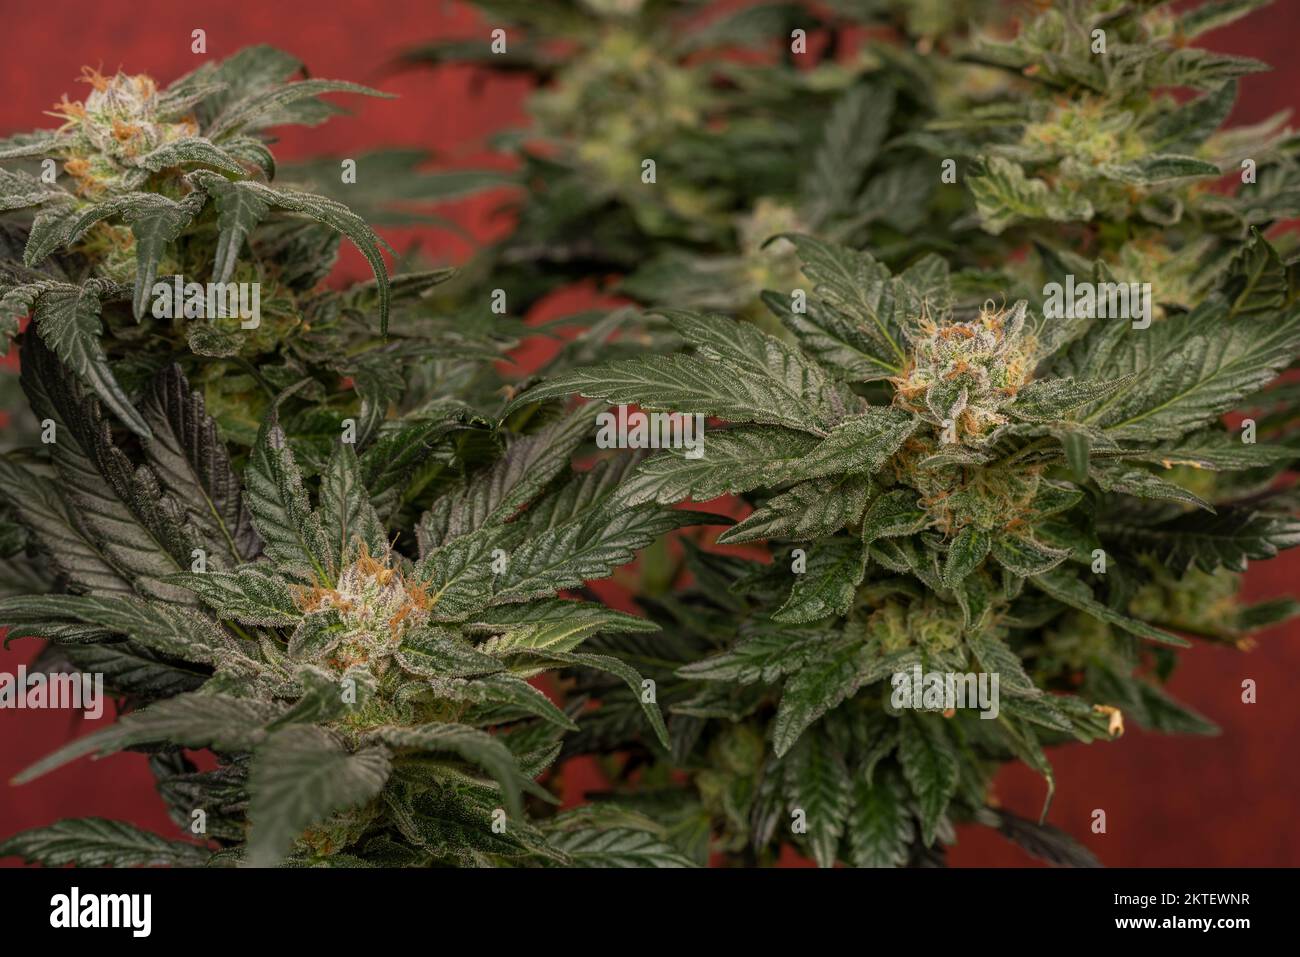 Mother of berries variety of marijuana with ripened bloom and dark red backbround Stock Photo